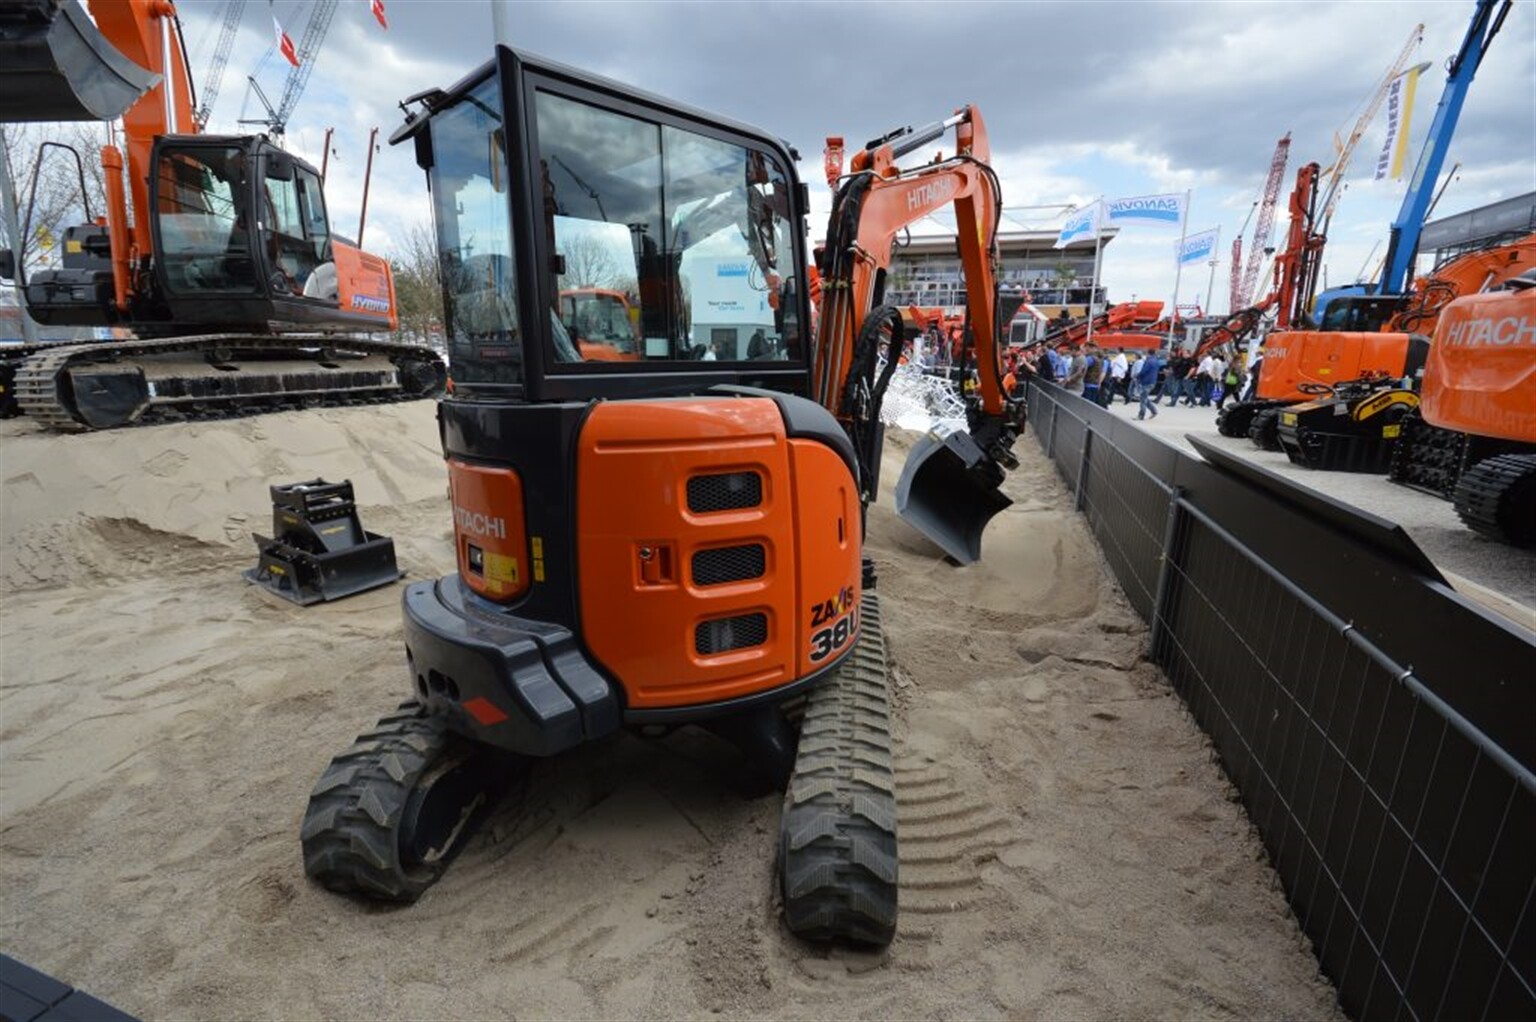 Hitachi launches new Dash 5 mini excavators at Bauma